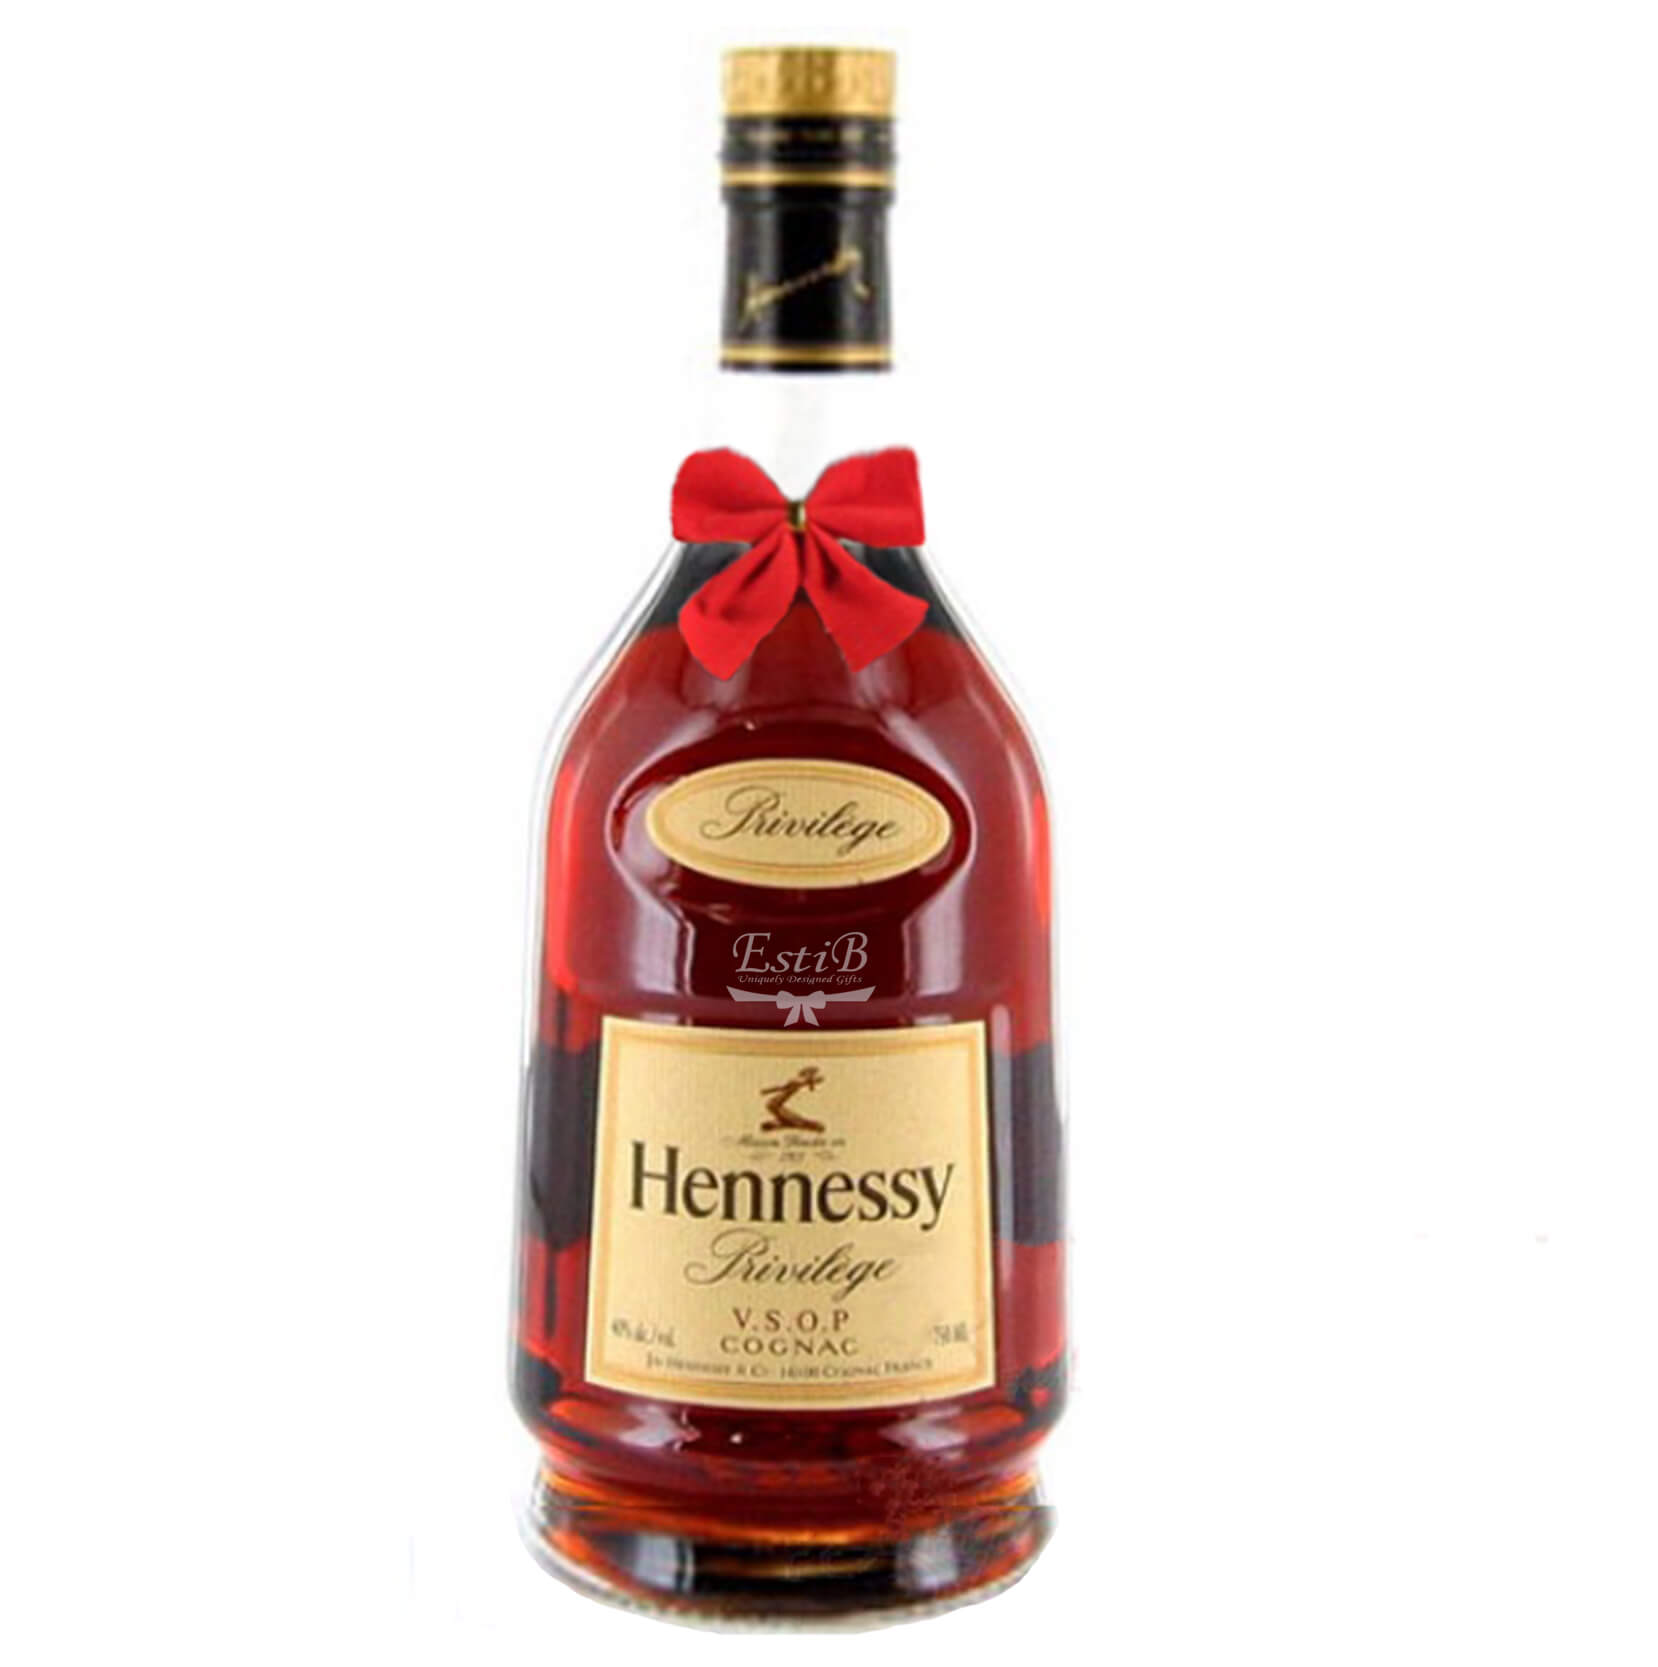 Хеннесси Привилеж VSOP. Hennessy VSOP Privilege Cognac. Коньяк таможня. Обои коньяк Хеннесси ВСОП Привилеж 40% 1 литр. Асканели 0.7 цена